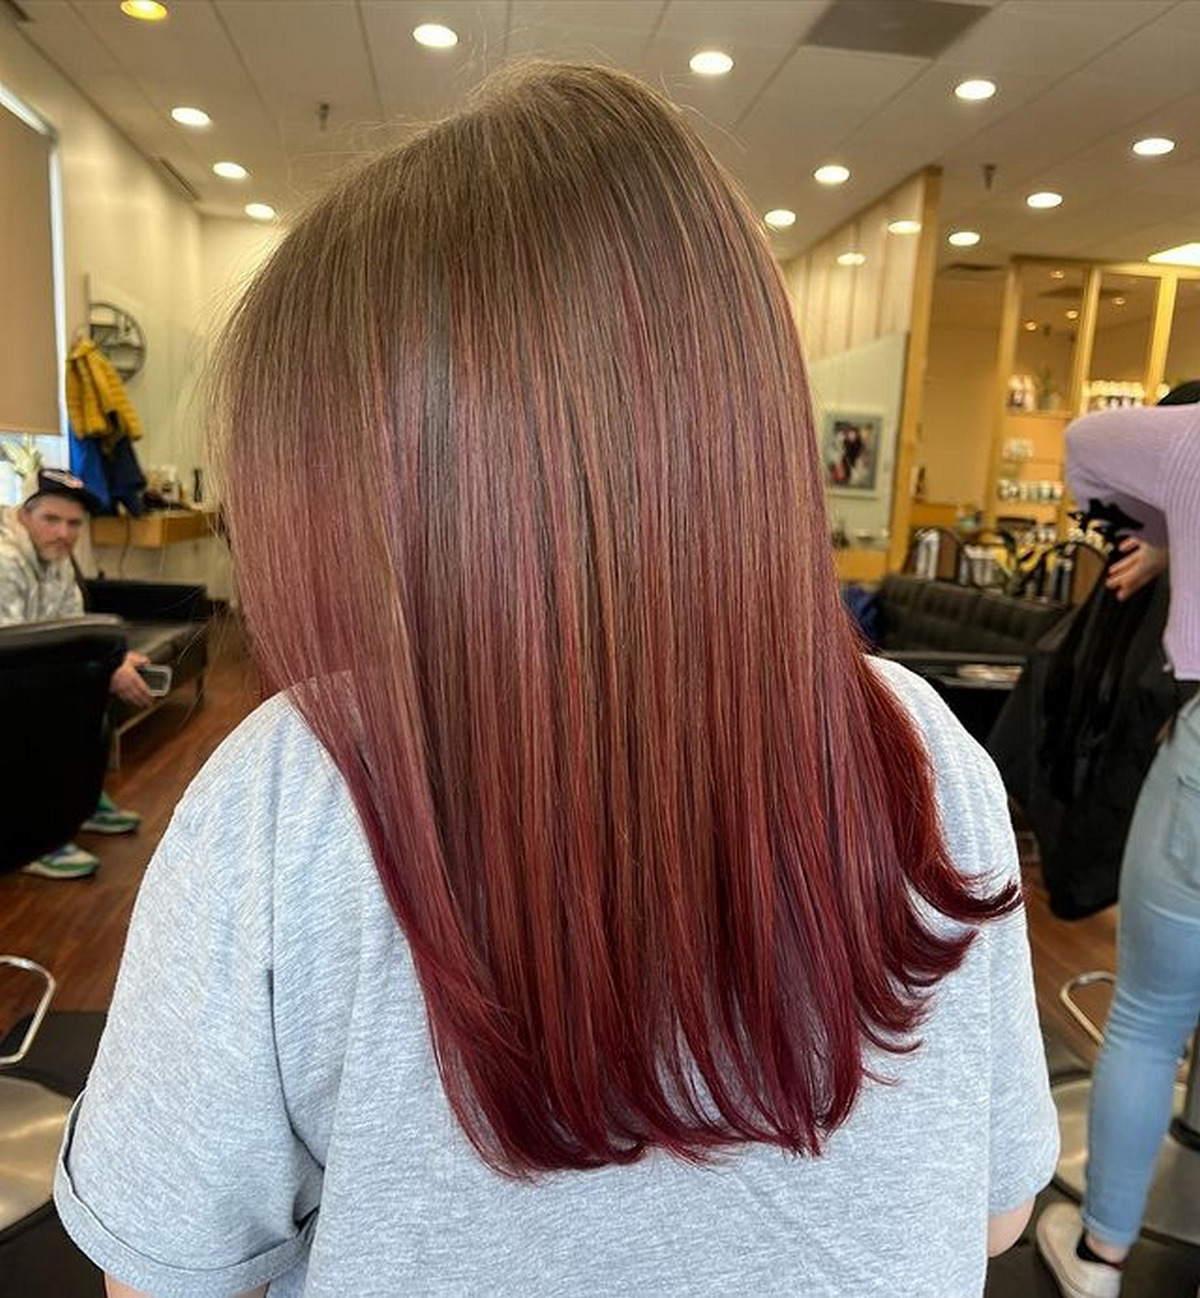 Medium-Length Hair With Red Balayage